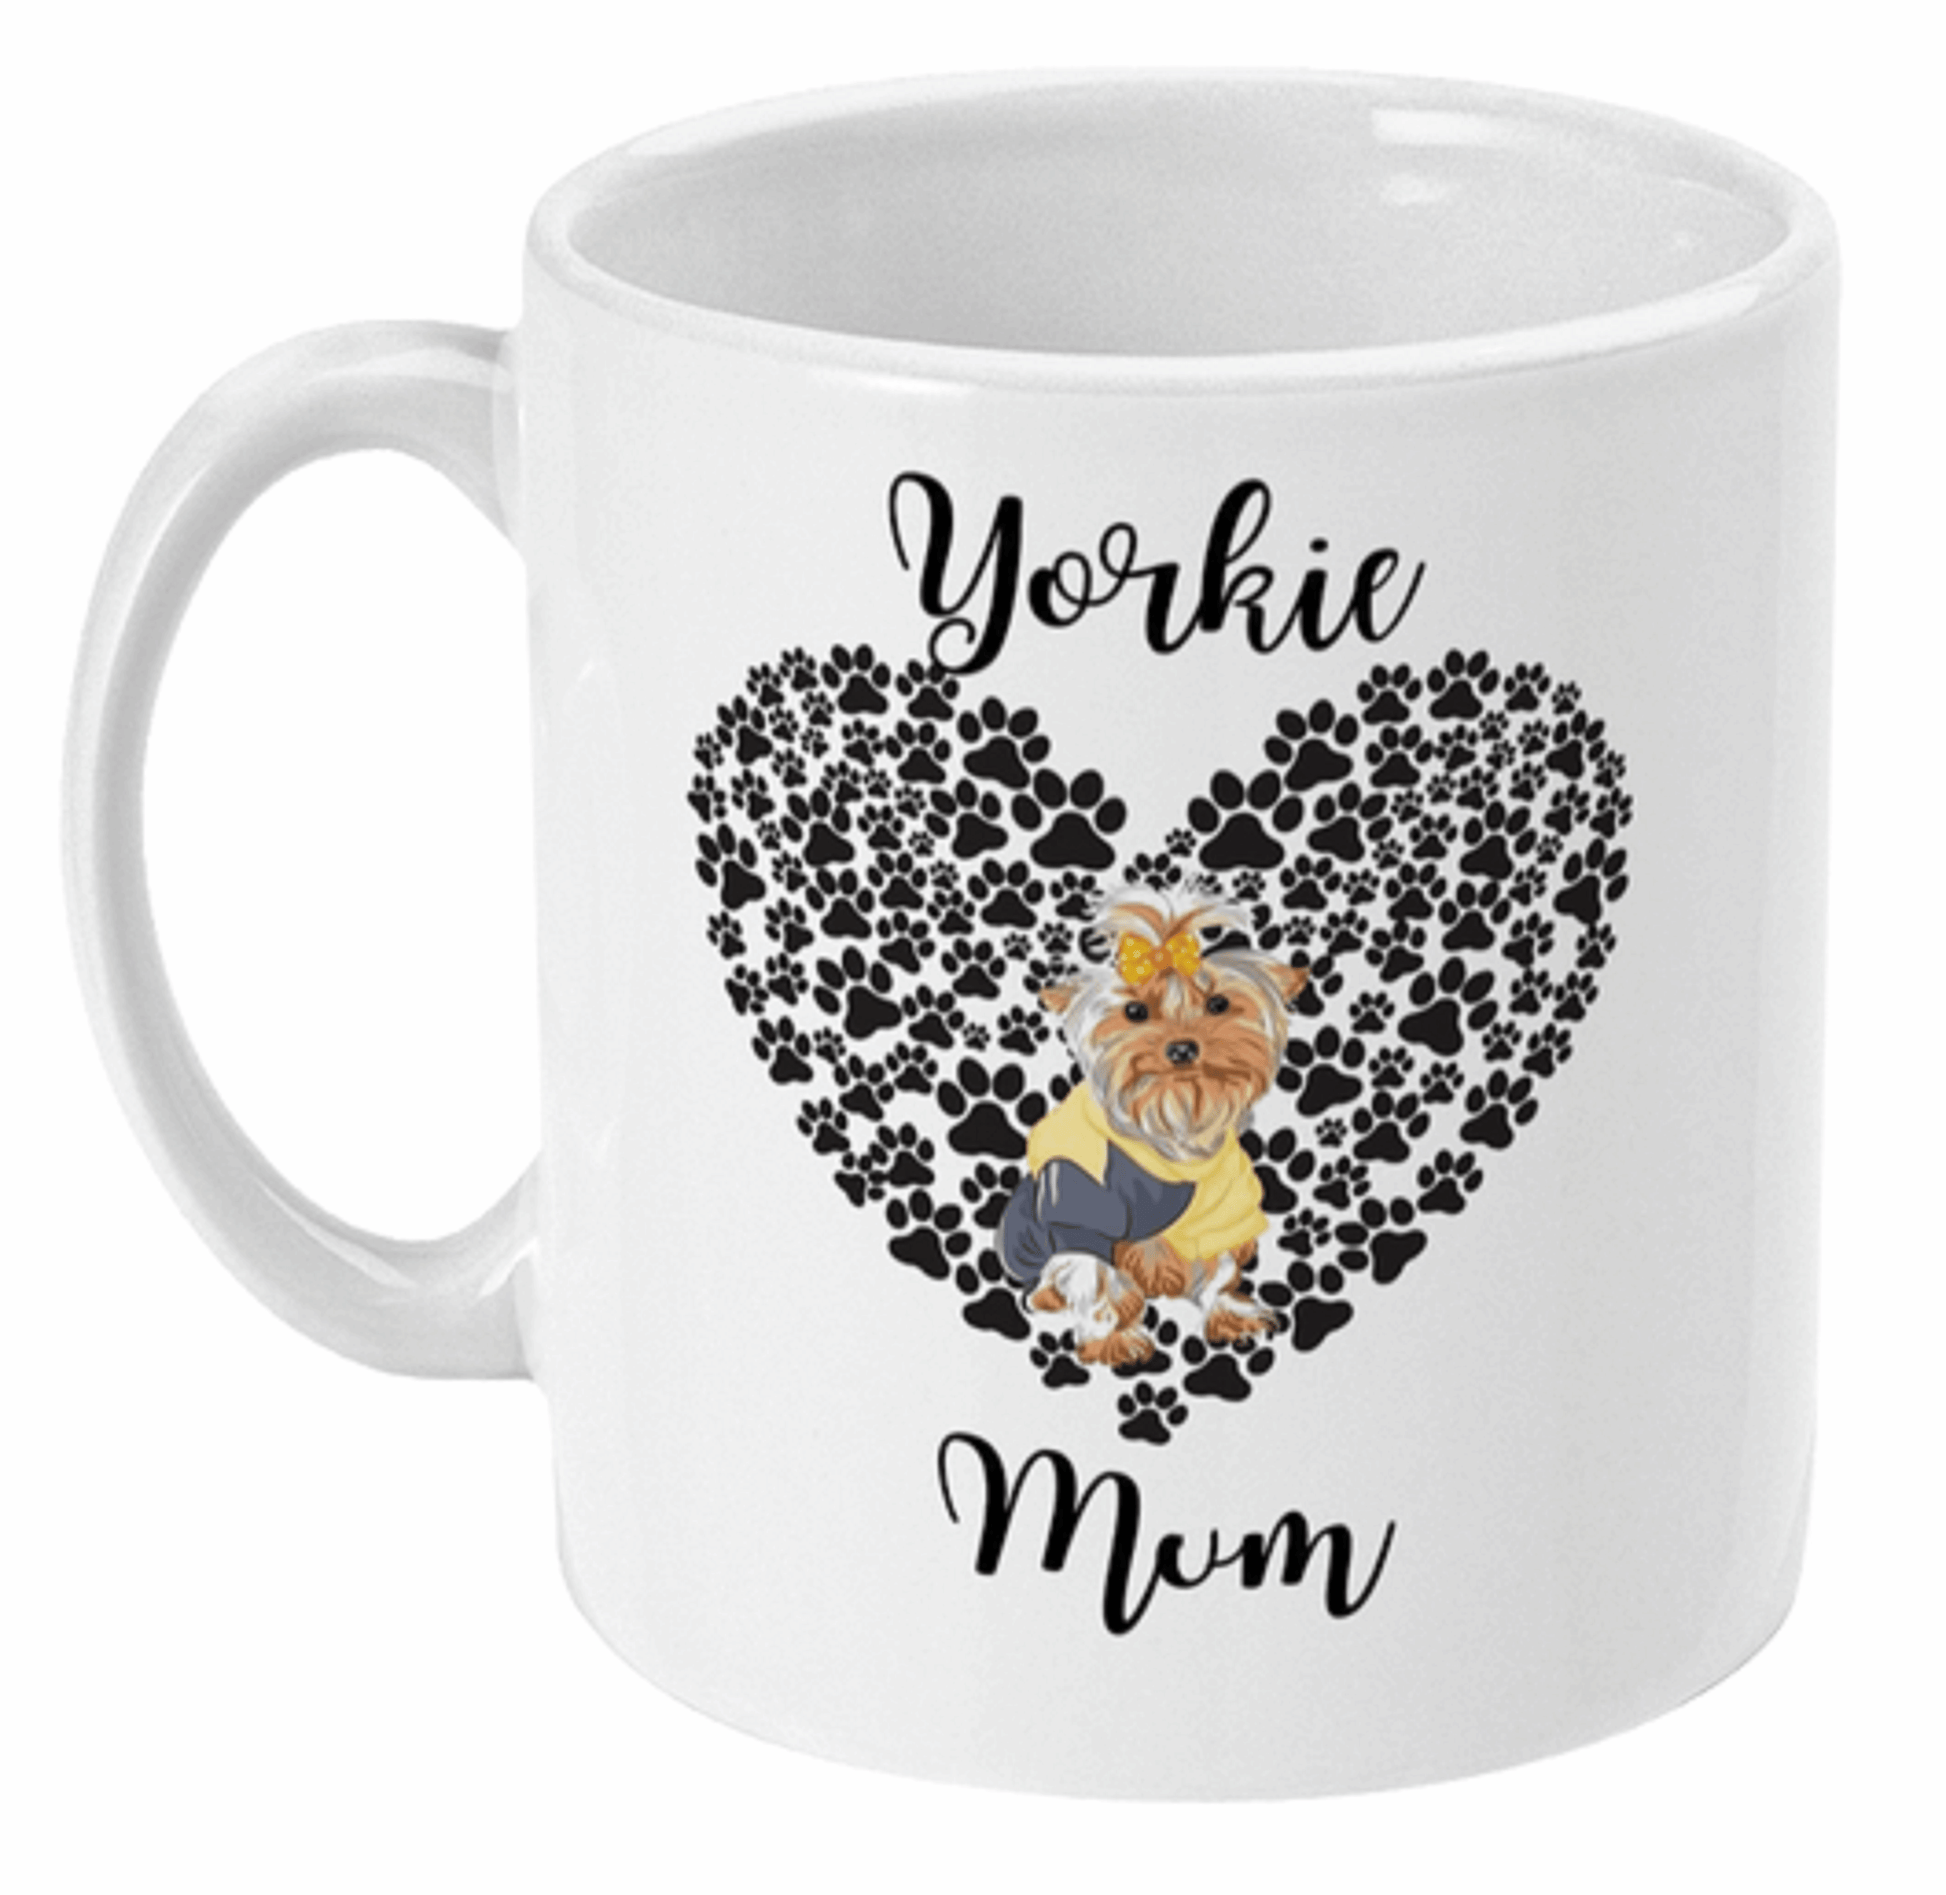  Beautiful Yorkie Dog Mum Heart Coffee Mug by Free Spirit Accessories sold by Free Spirit Accessories